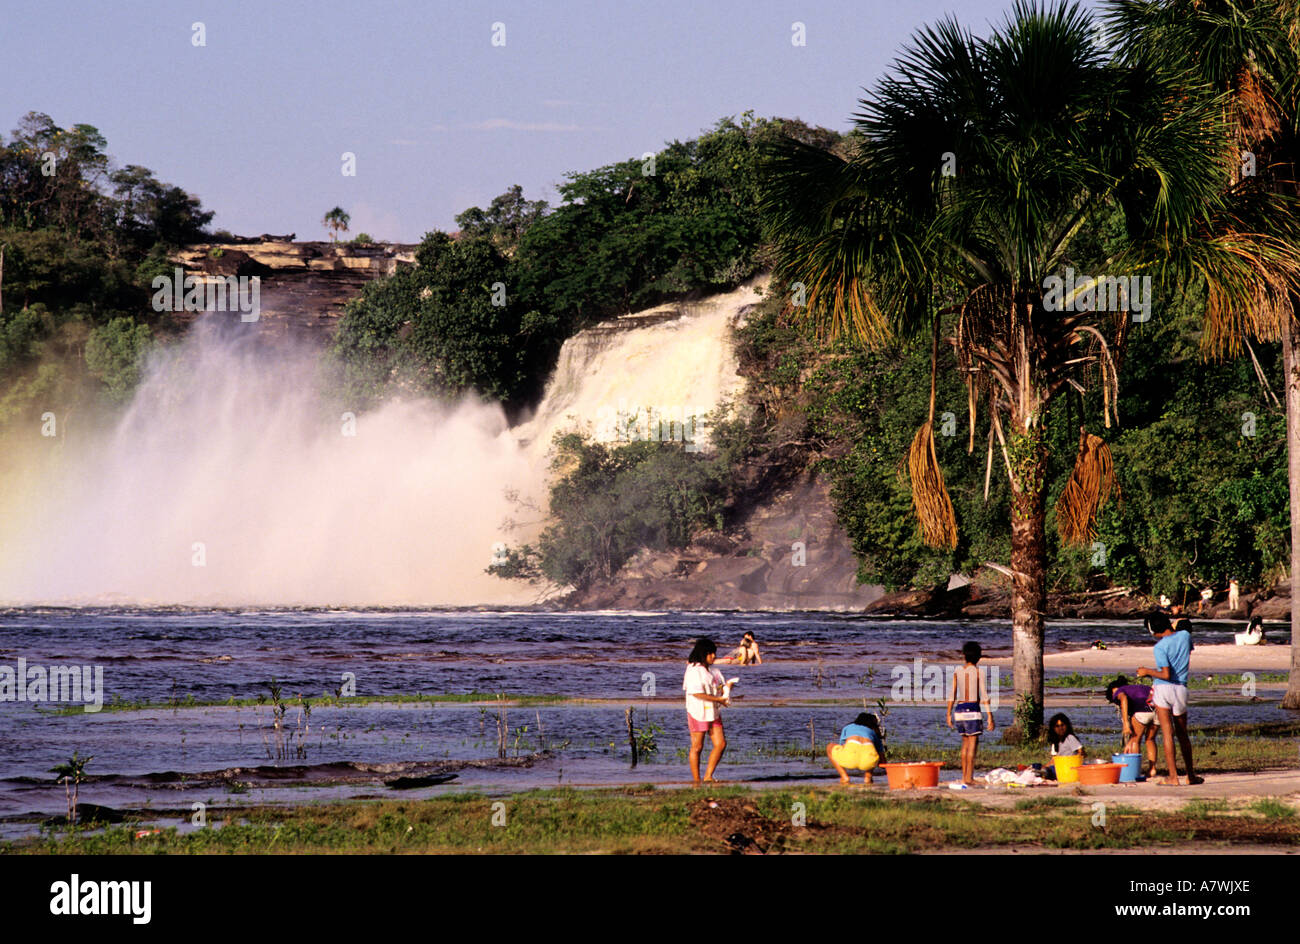 Venezuela, Guayana region, the falls of Canaima Stock Photo